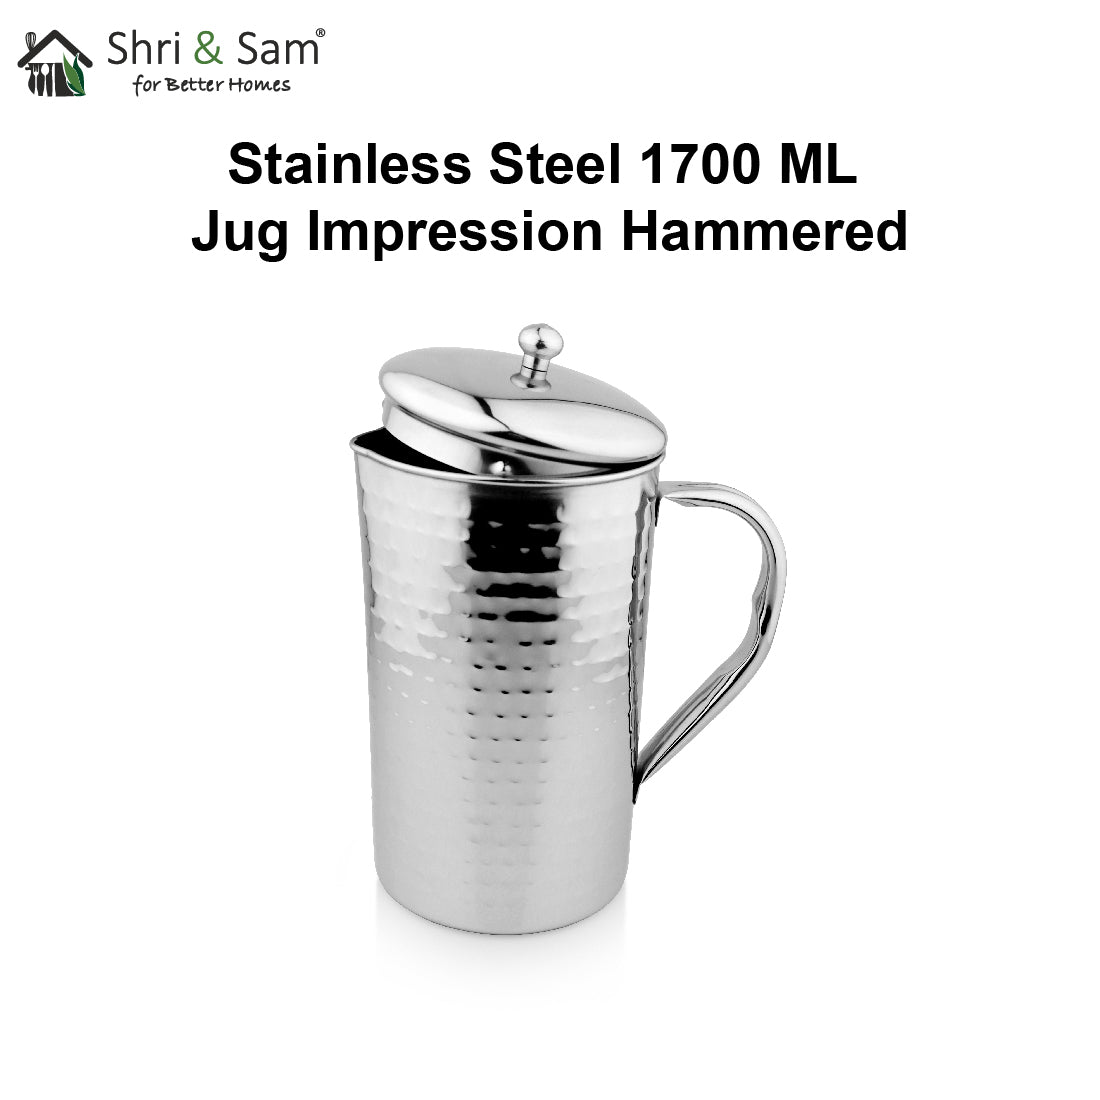 Stainless Steel 1700 ML Hammered Jug Impression